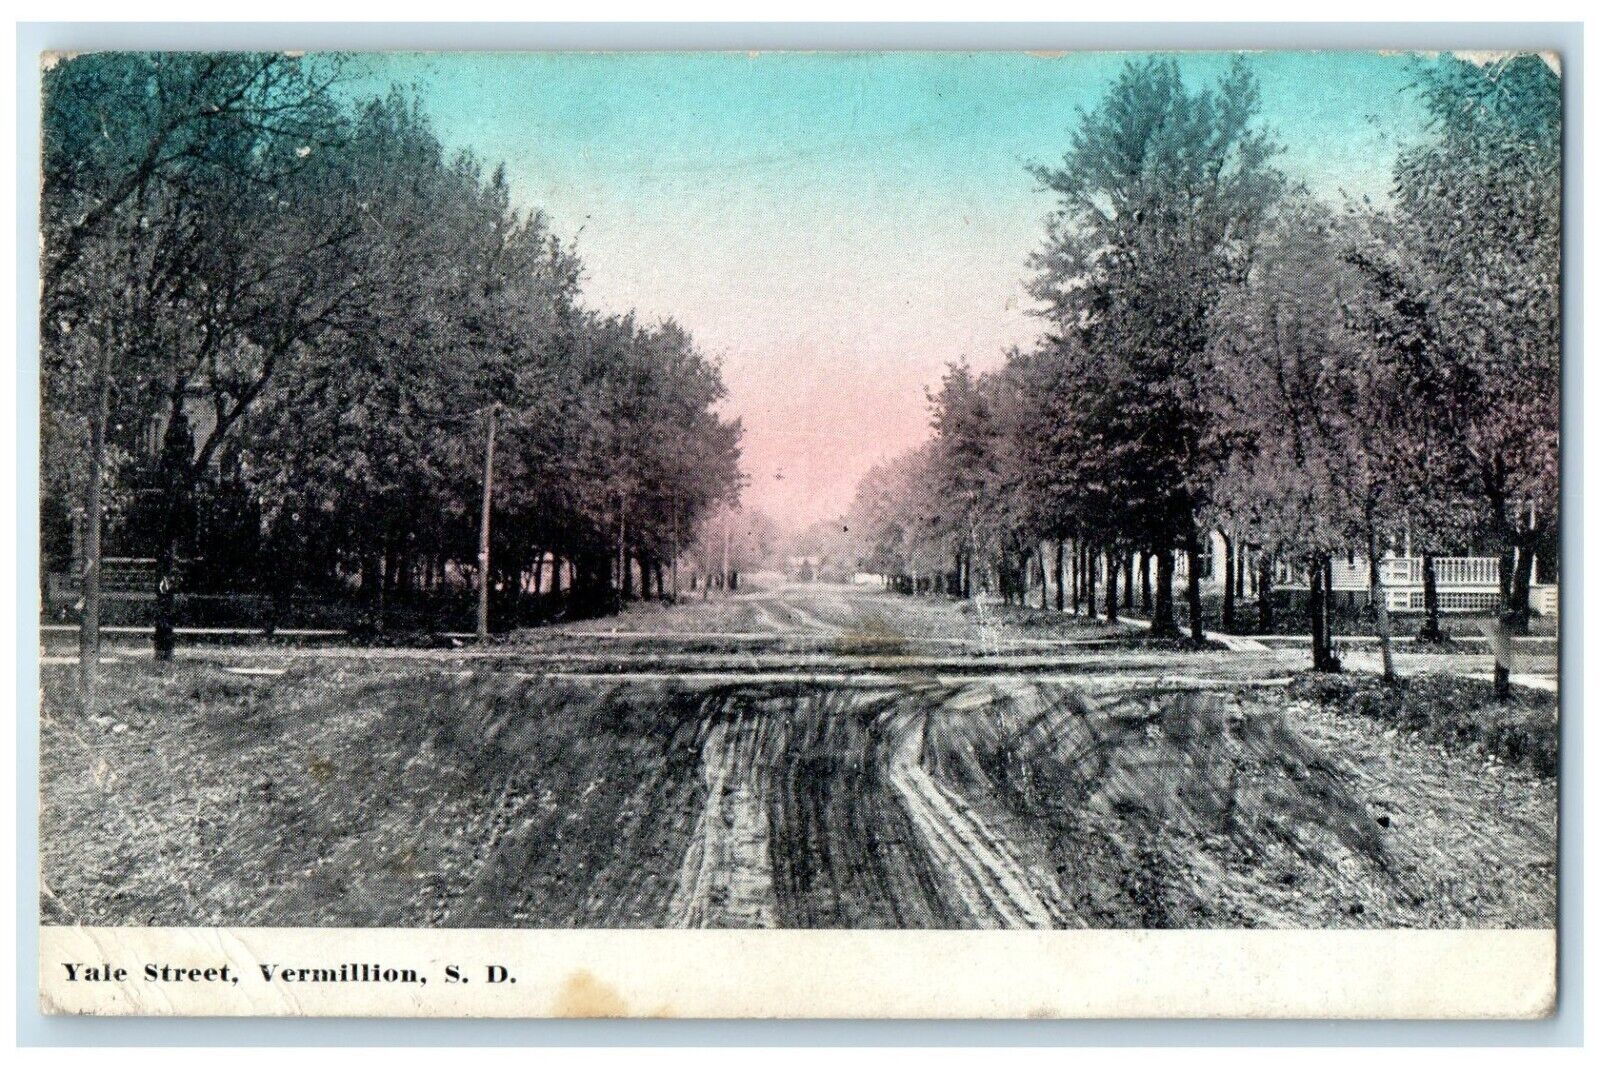 1910 Yale Street Road Trees Vermillion South Dakota SD Vintage Antique Postcard